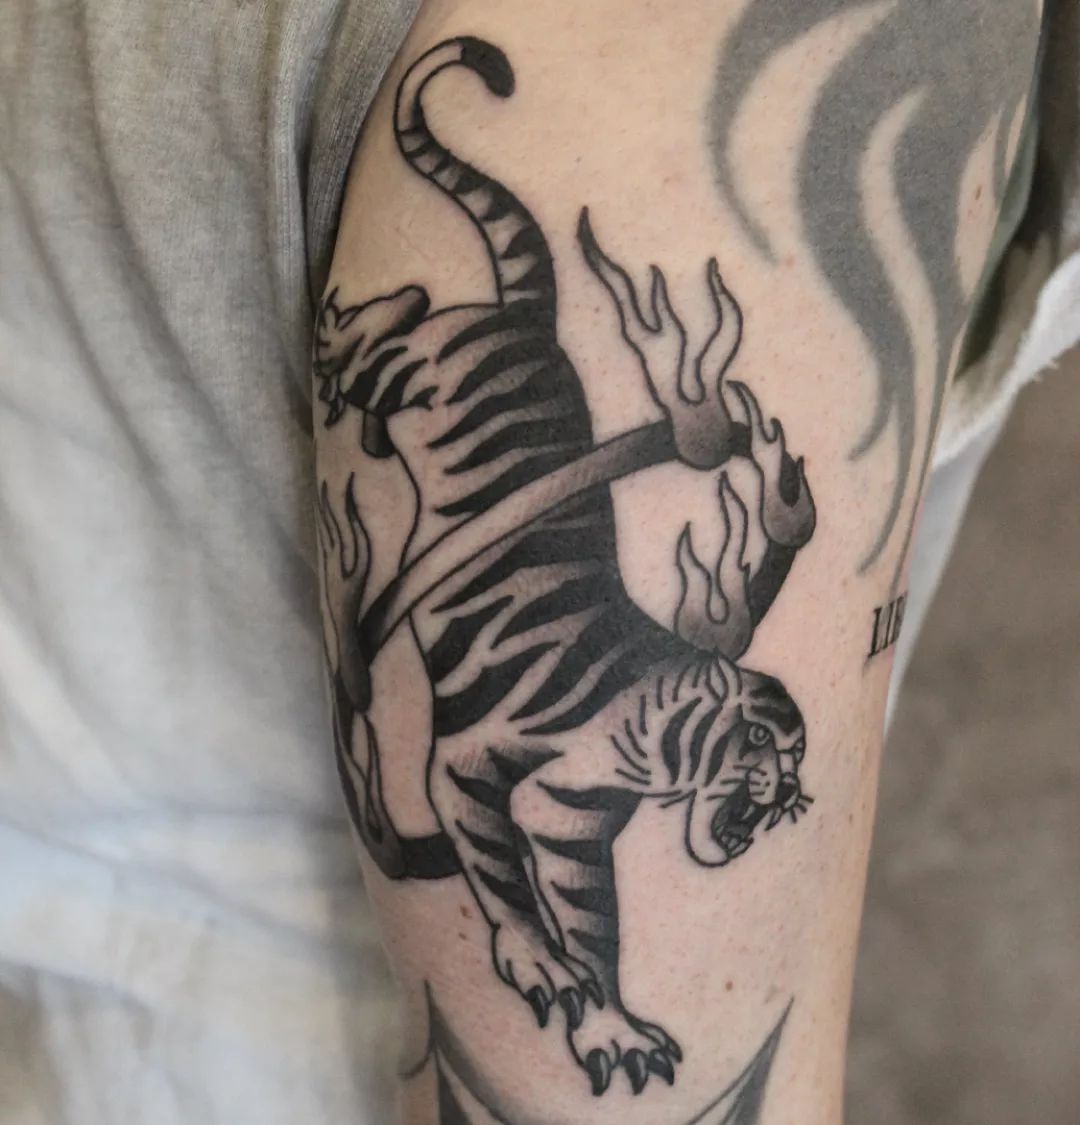 Hyper- realistic- Tiger- Gabfiller !!! Thx Oliver!
#germantattooers #tattooworke